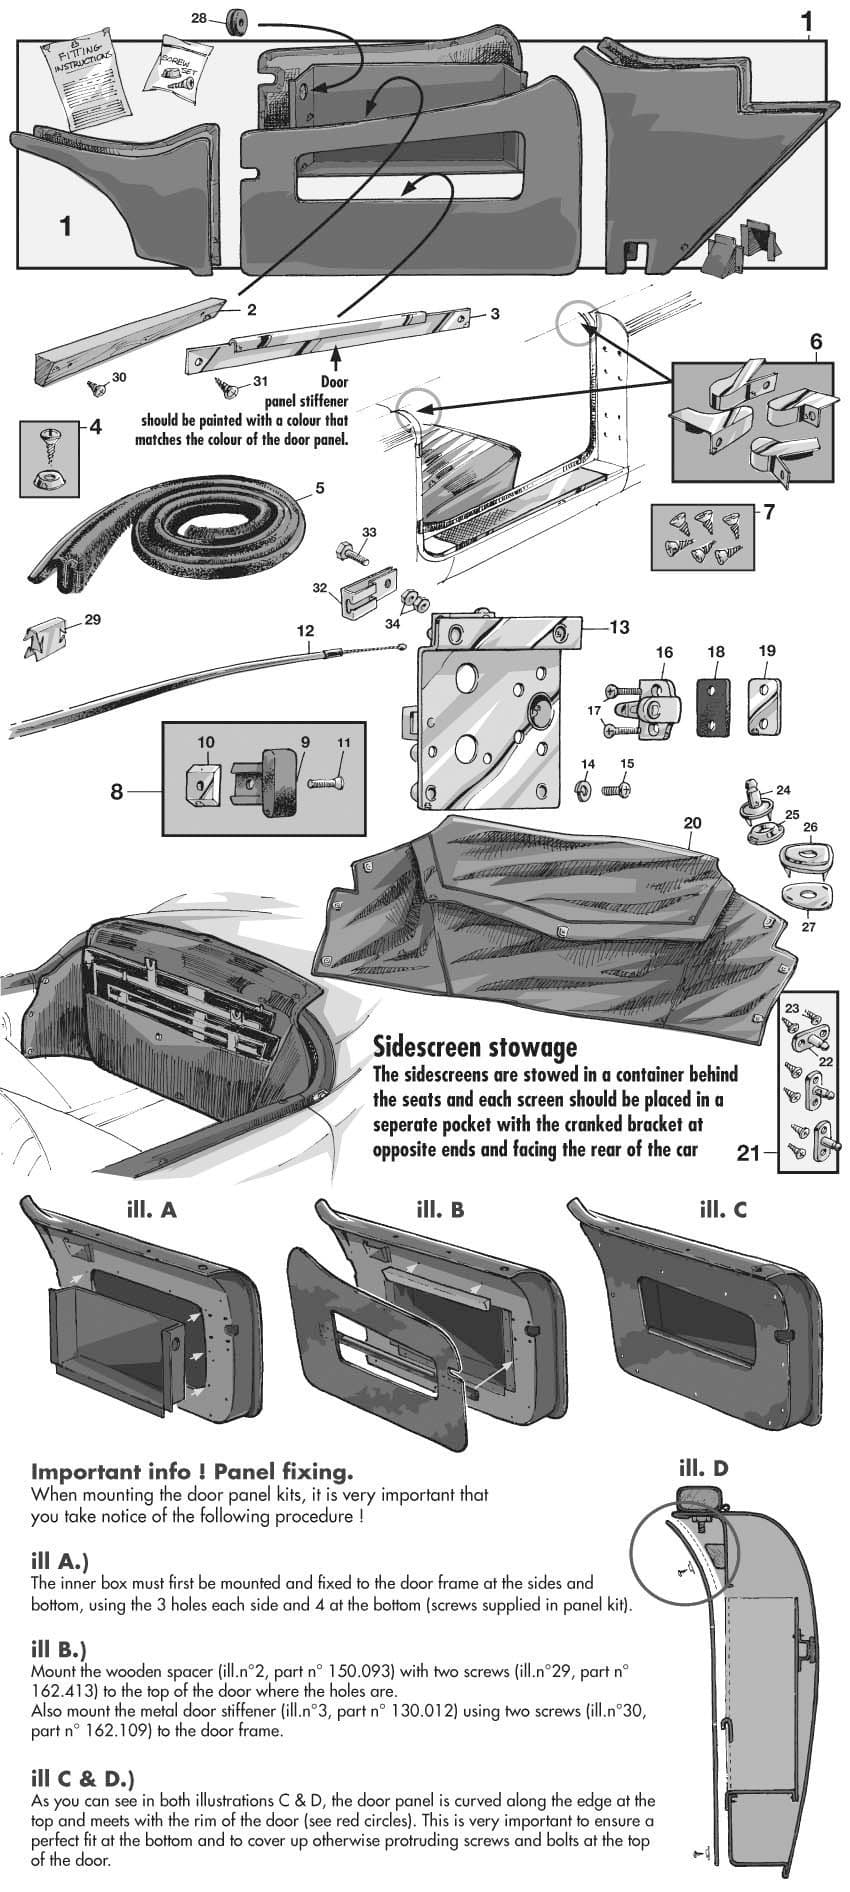 MGA 1955-1962 - Oven sisäkahvat | Webshop Anglo Parts - 1